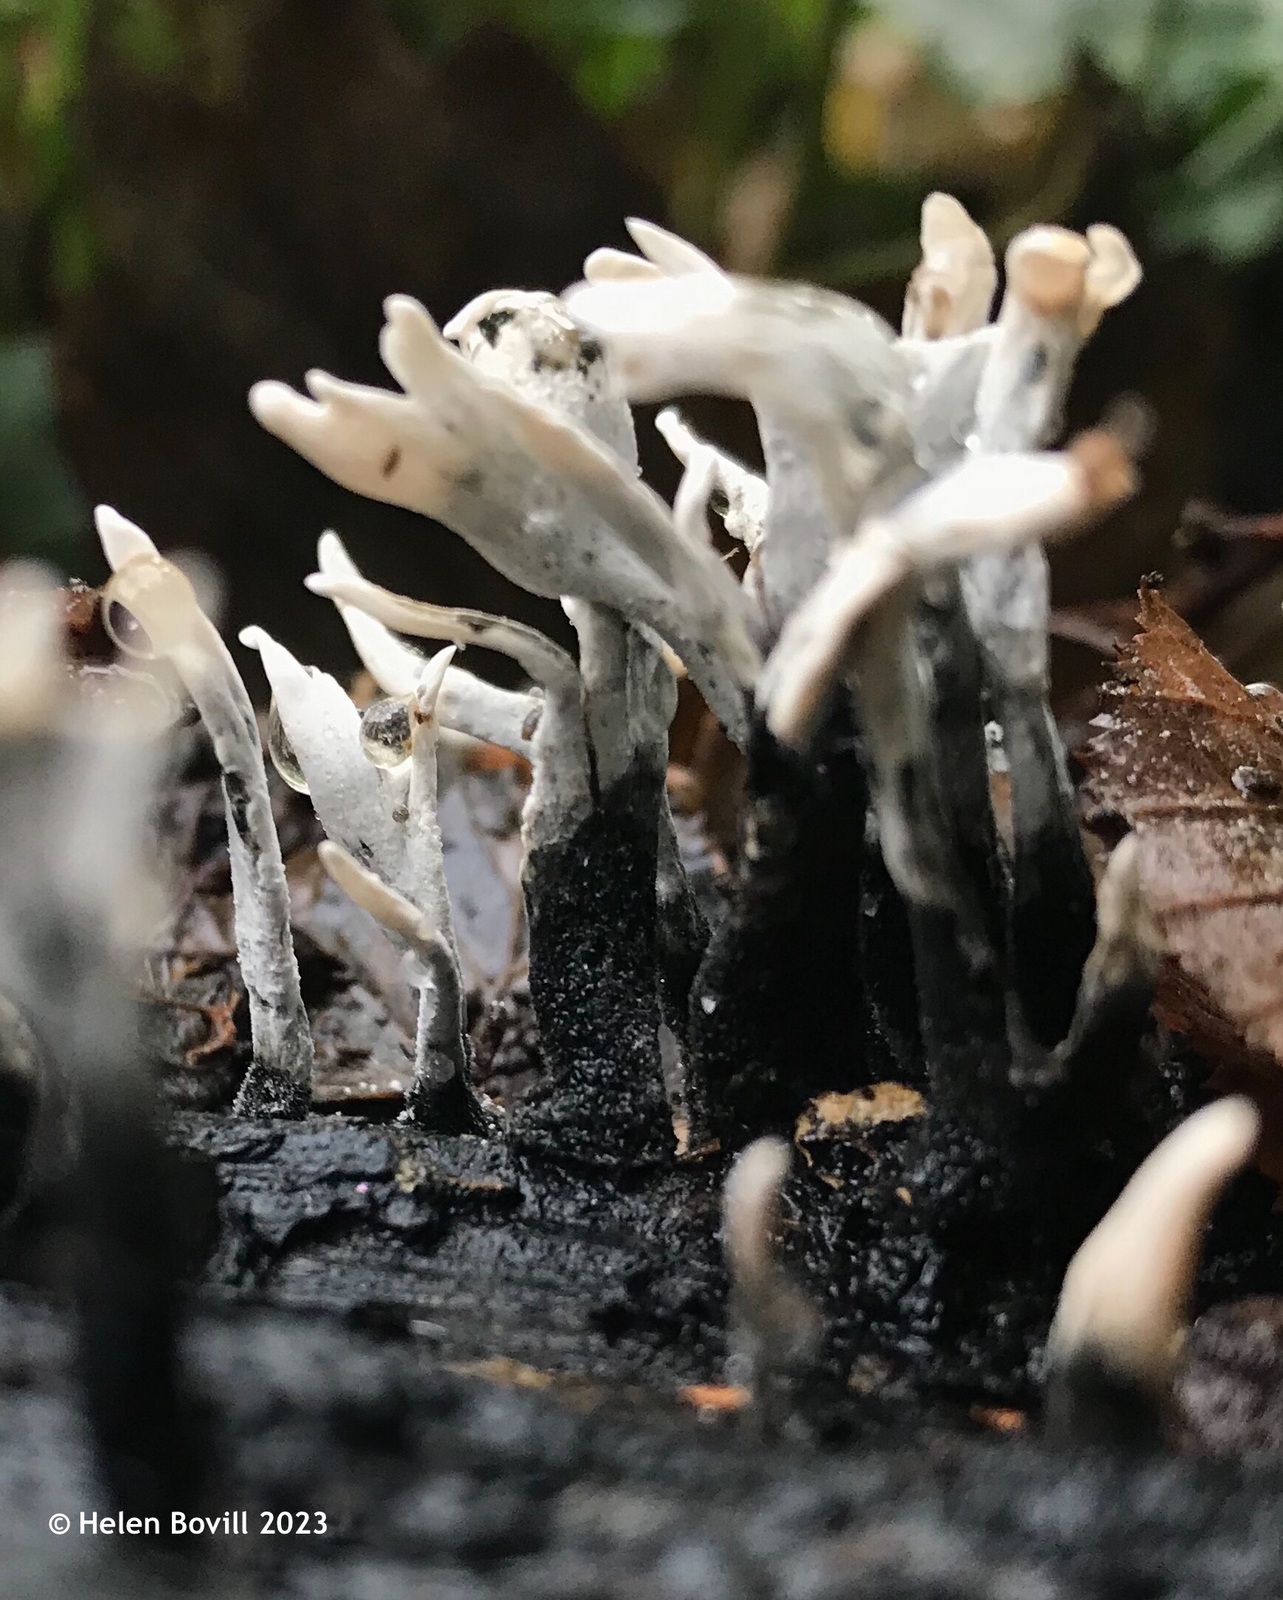 Candlesnuff fungus growing on a rotting log